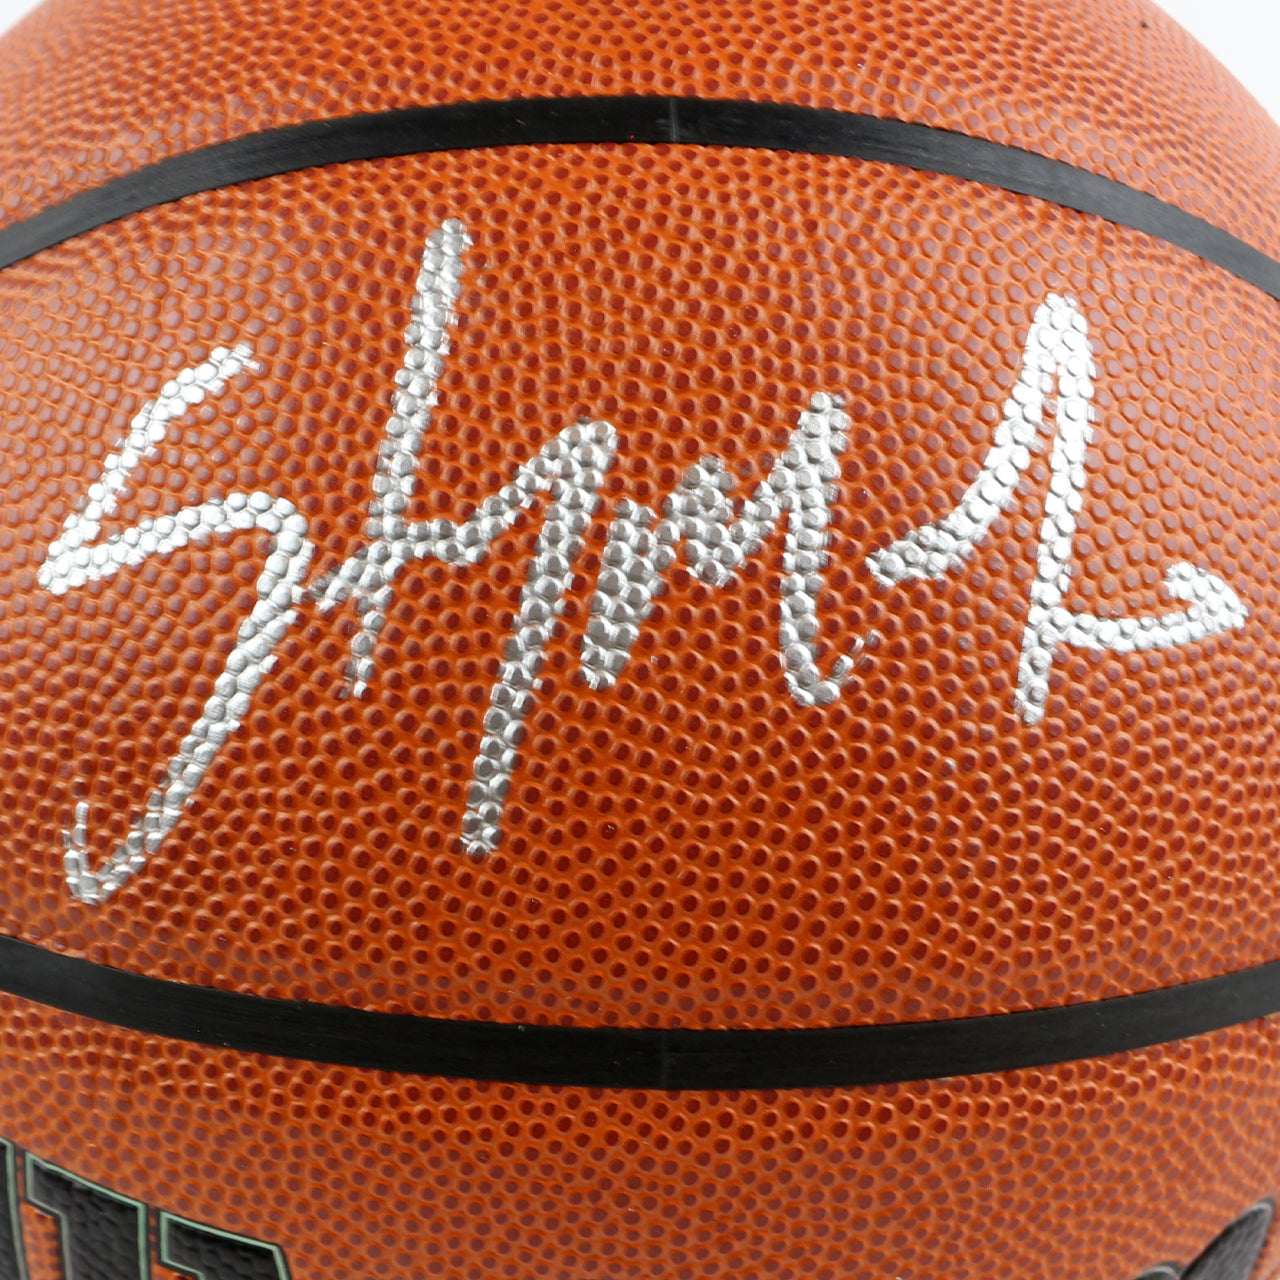 Carmelo Anthony Signed Wilson Basketball